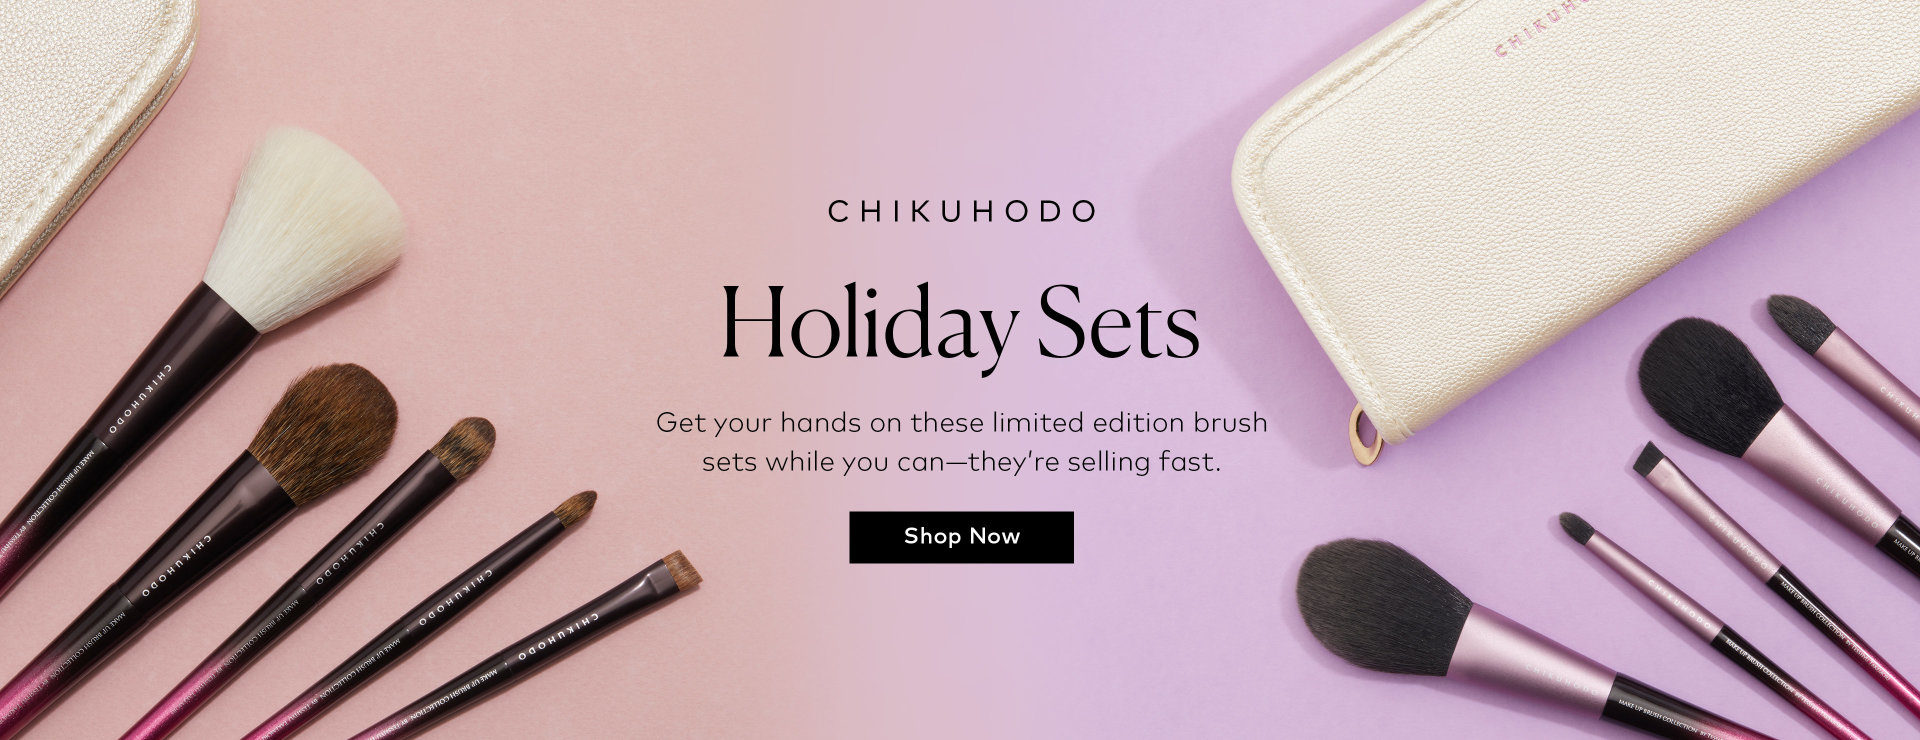 Shop the CHIKUHODO Holiday Sets on Beautylish.com